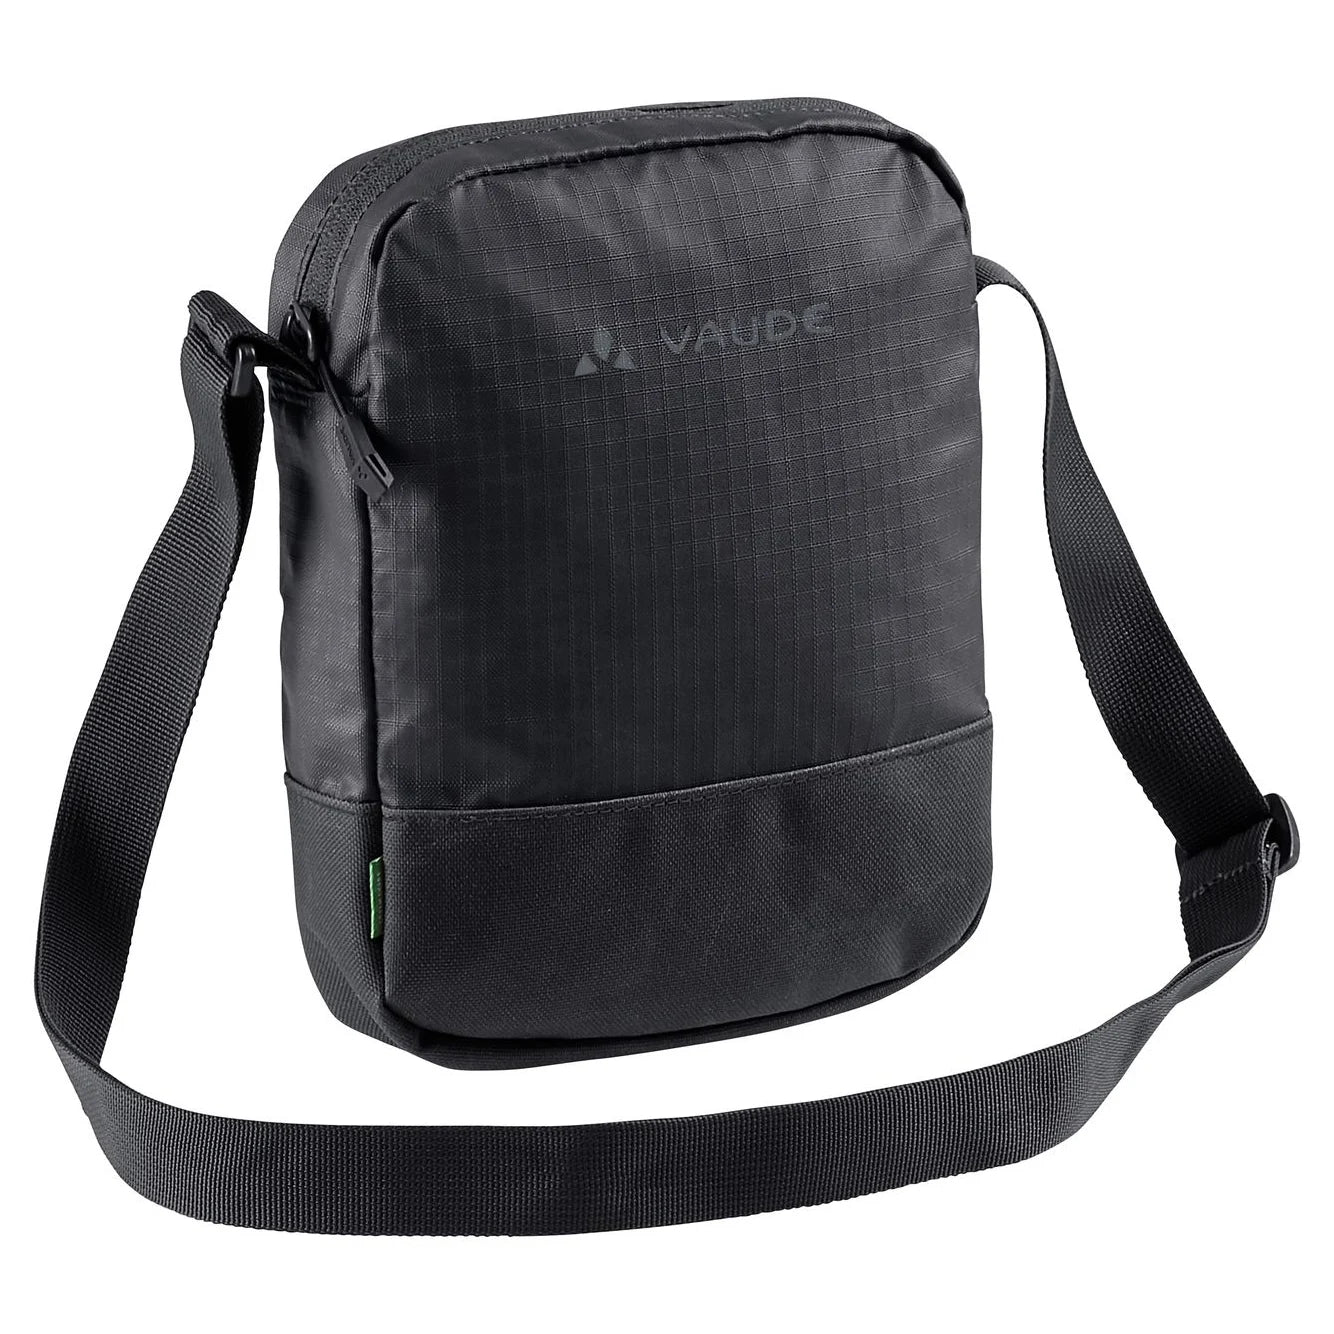 Vaude City Ben Shoulder Bag 24 cm - Black